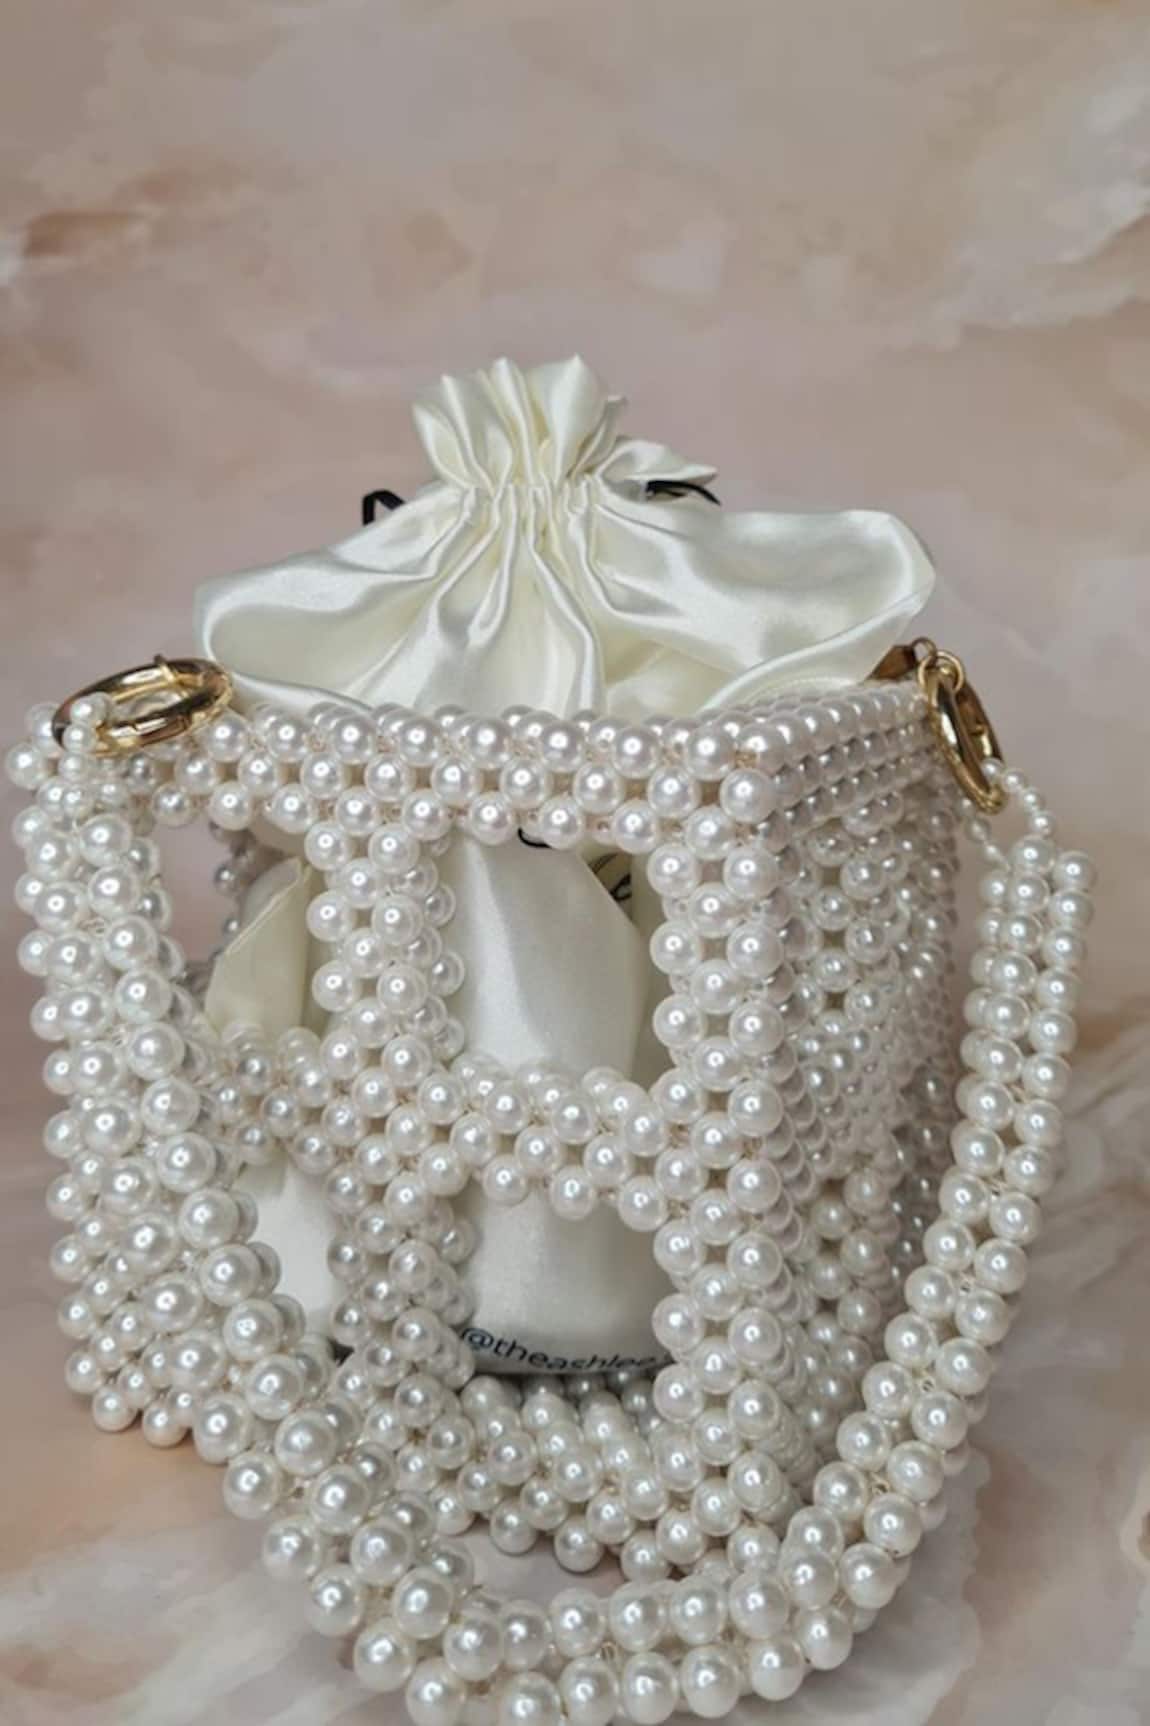 The Ashlee design co. Acrylic Pearl Embellished Bag